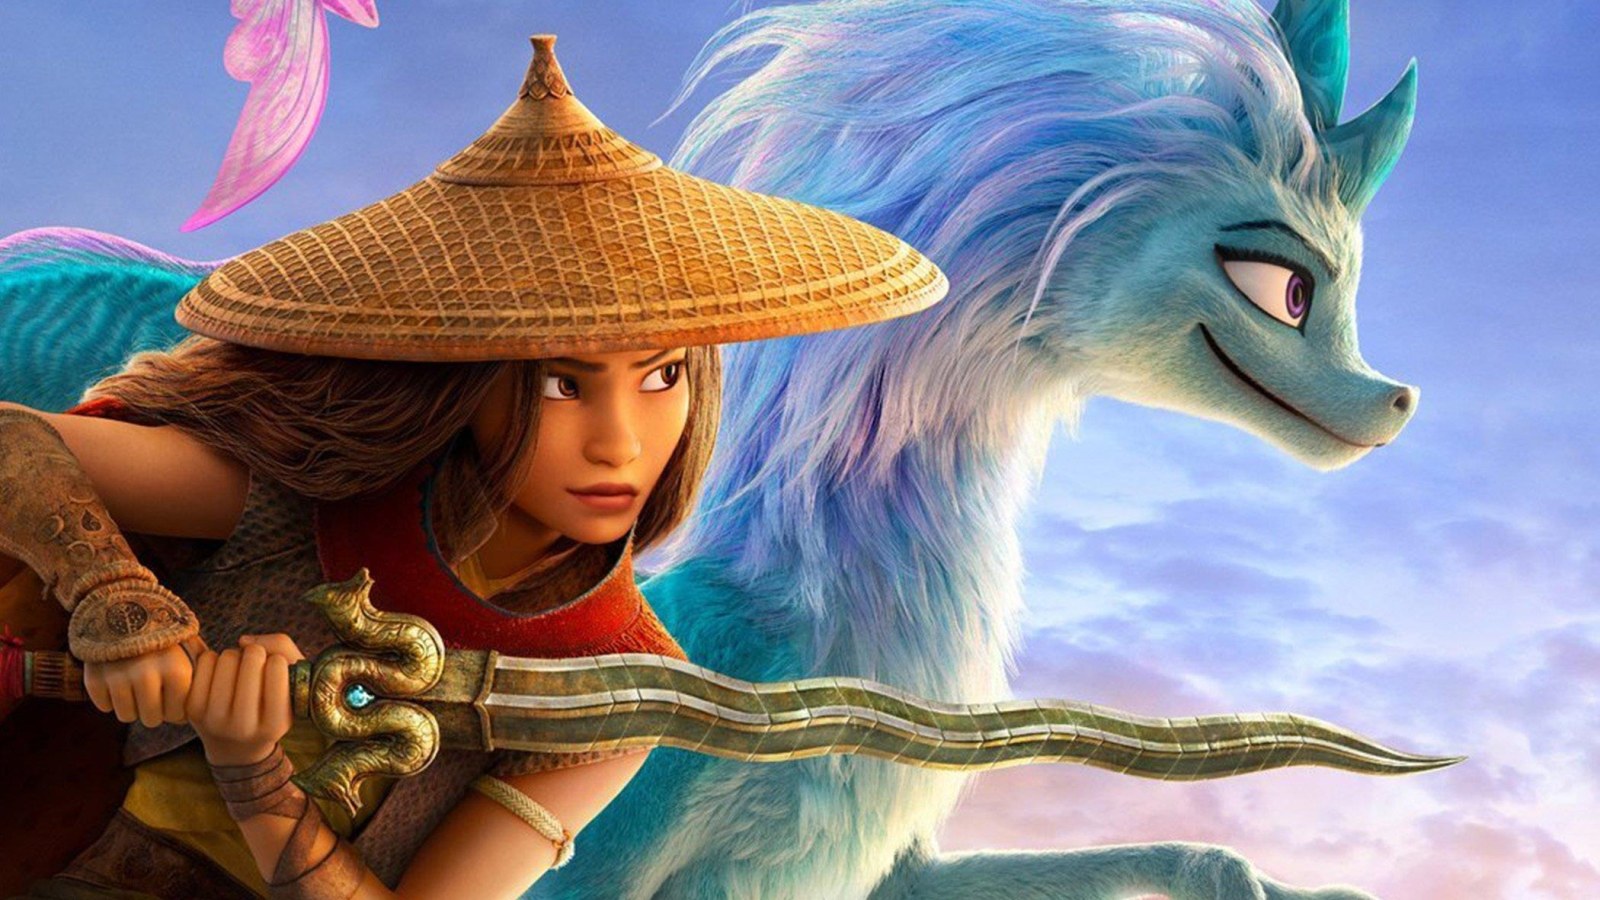 Raya And The Last Dragon Full Movie Watch Online Free Reddit